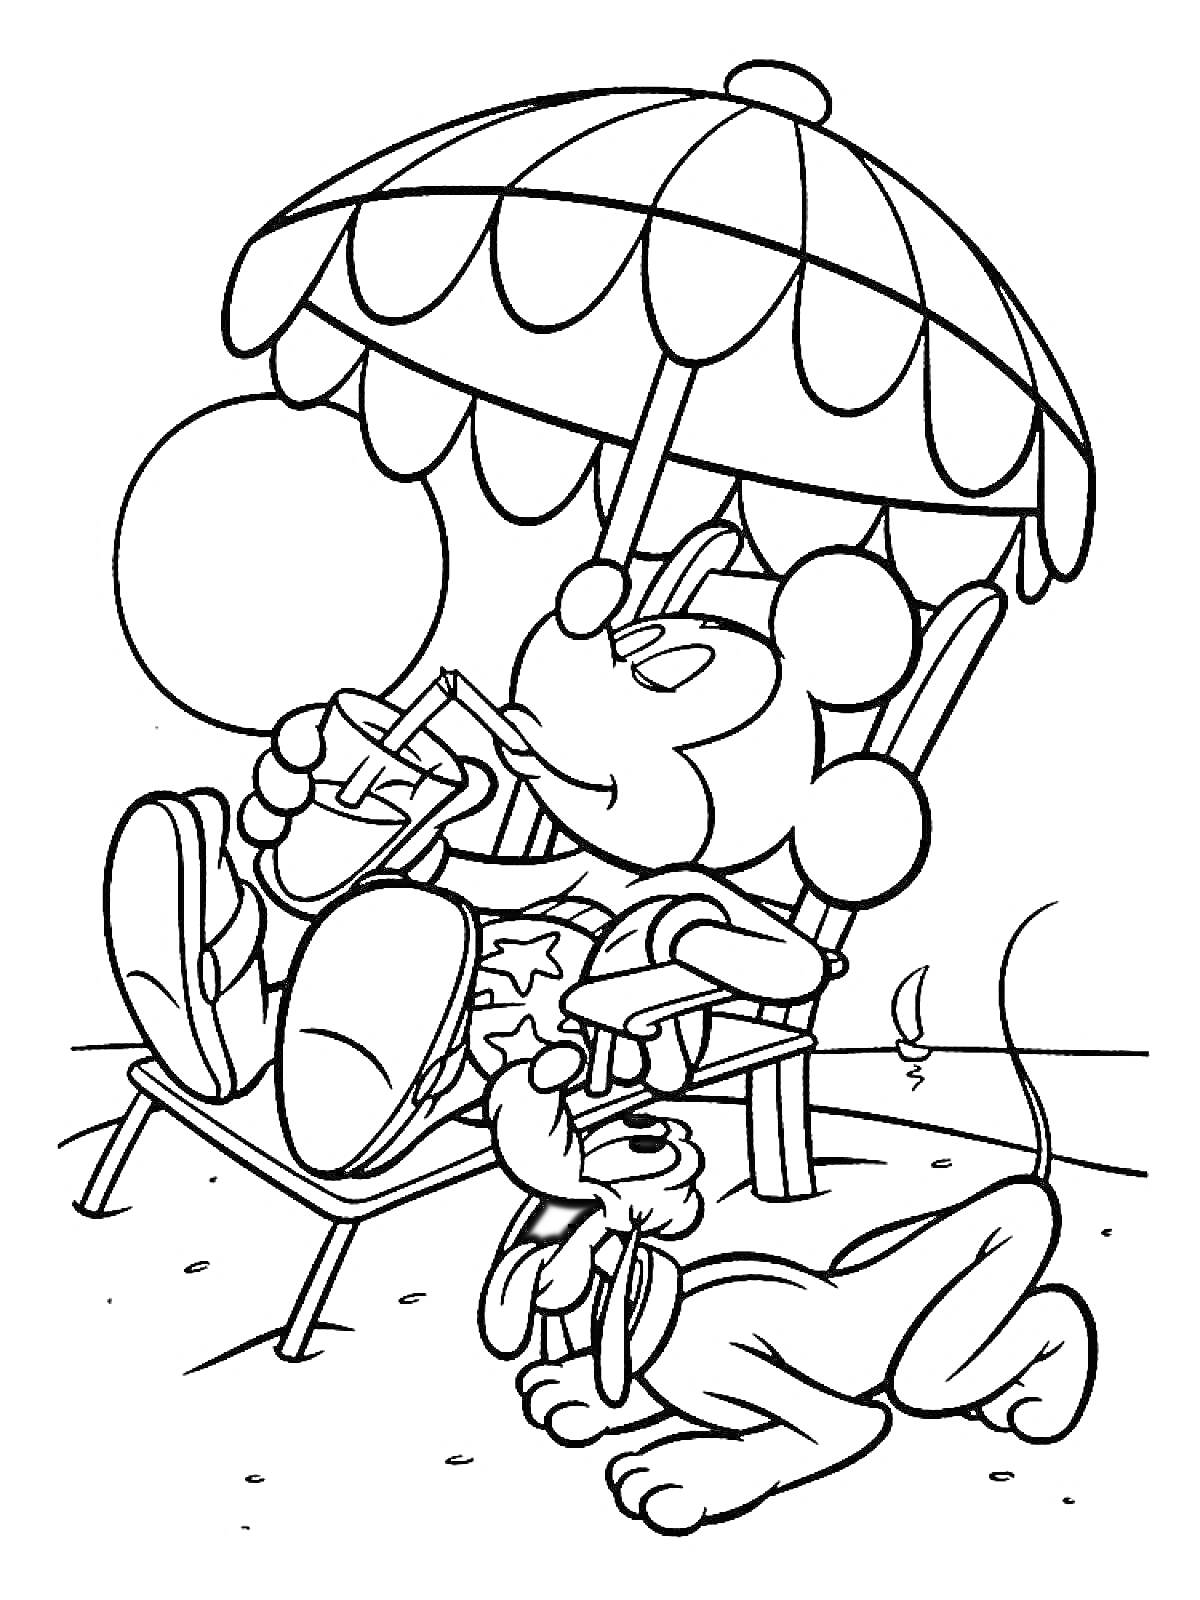 Раскраска Микки Маус отдыхает на пляже, сидя на шезлонге под зонтом, с напитком в руке, рядом его собака Плуто